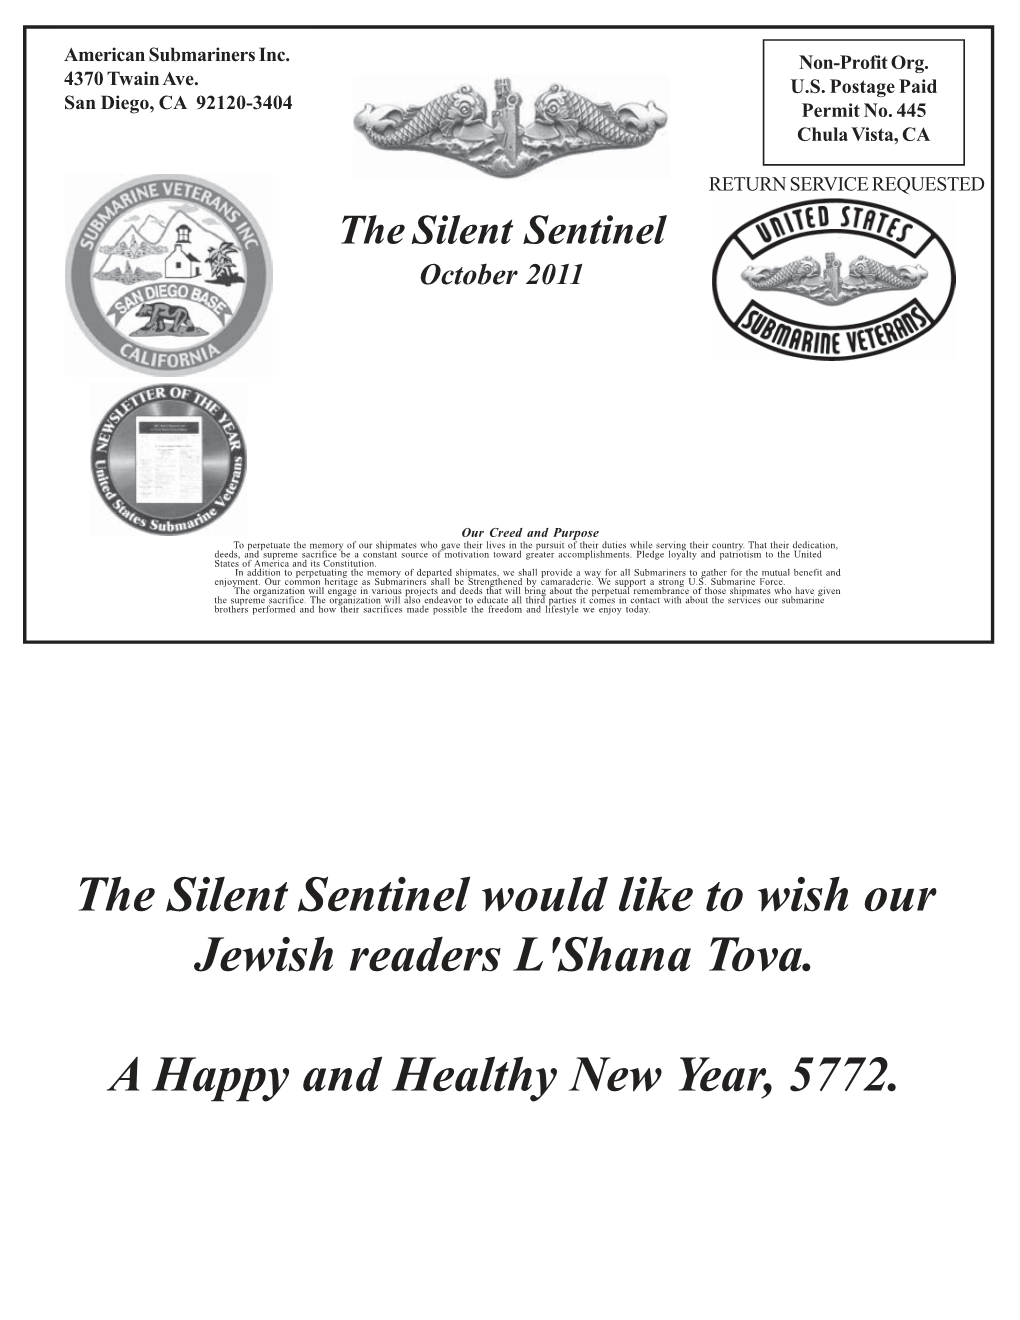 The Silent Sentinel Would Like to Wish Our Jewish Readers L'shana Tova